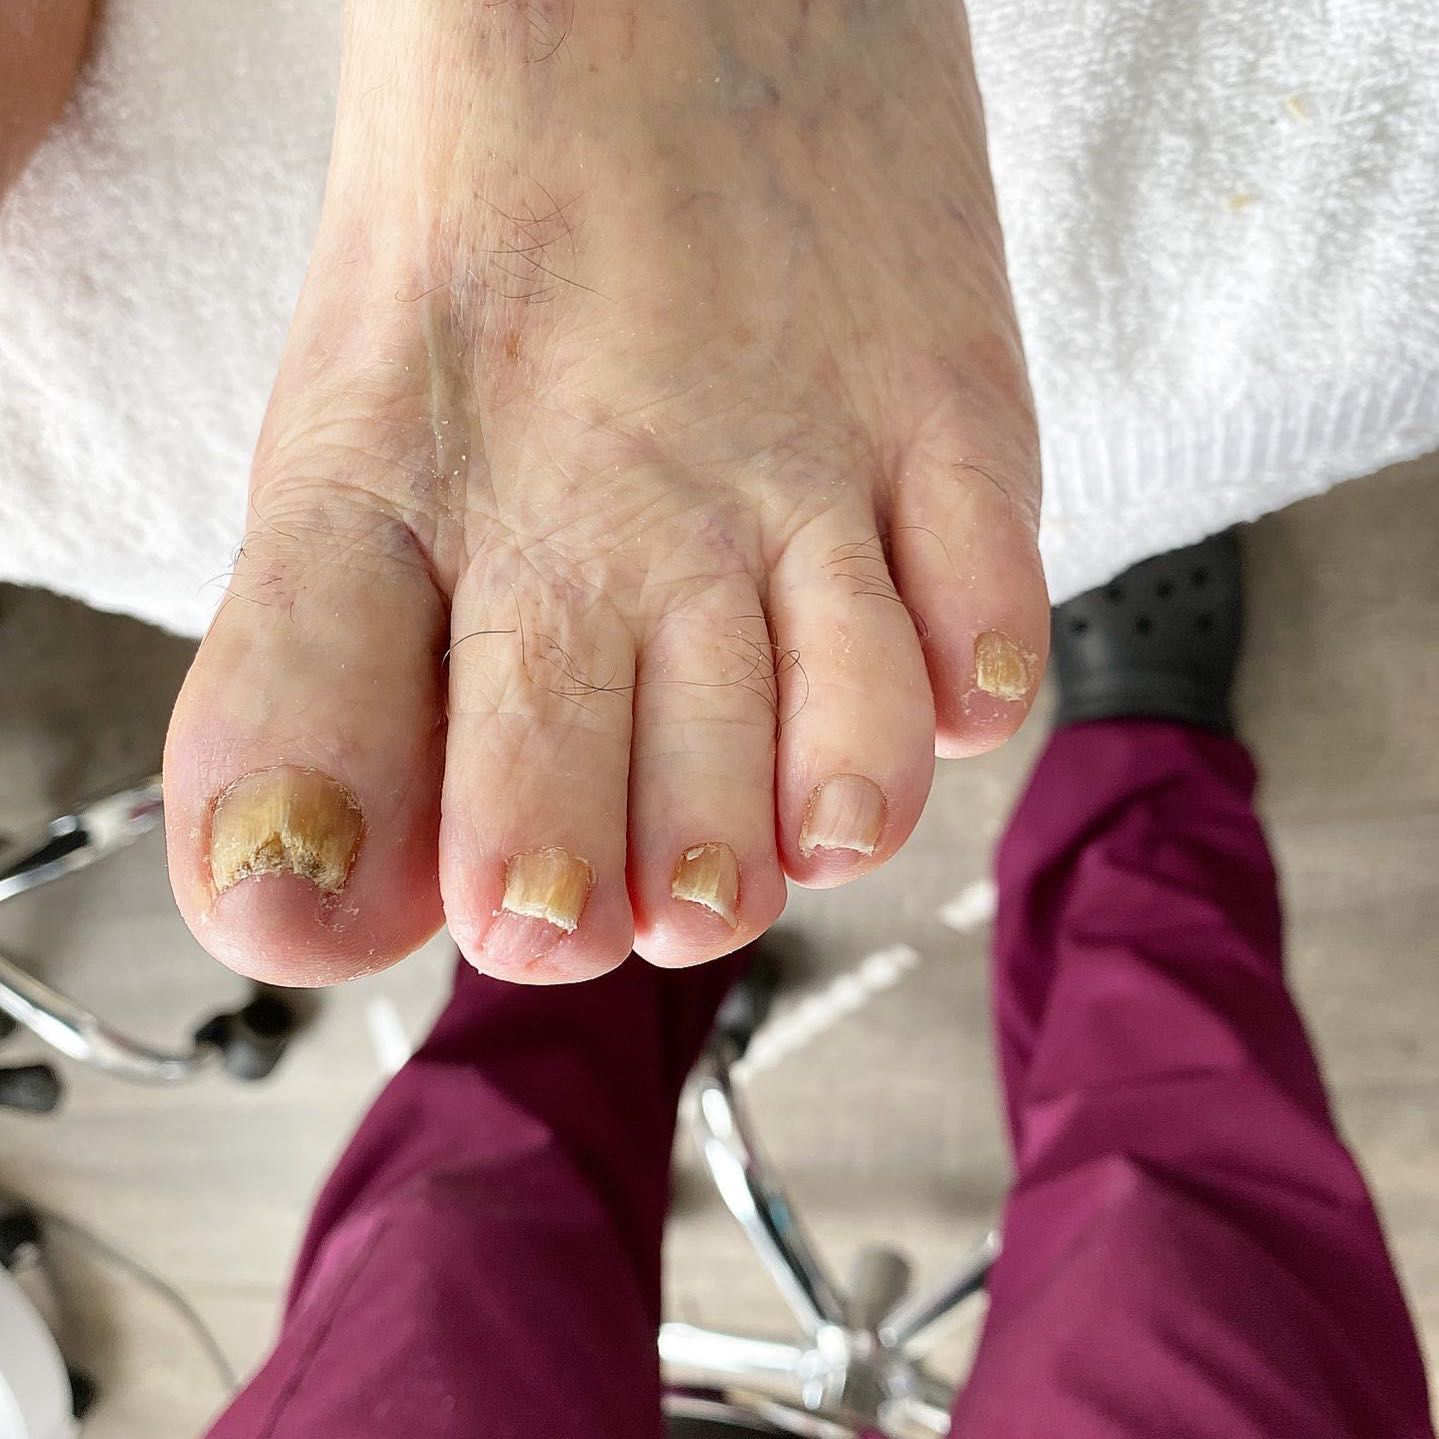 Toes nail cut only👣 or medical toe nails cut portfolio